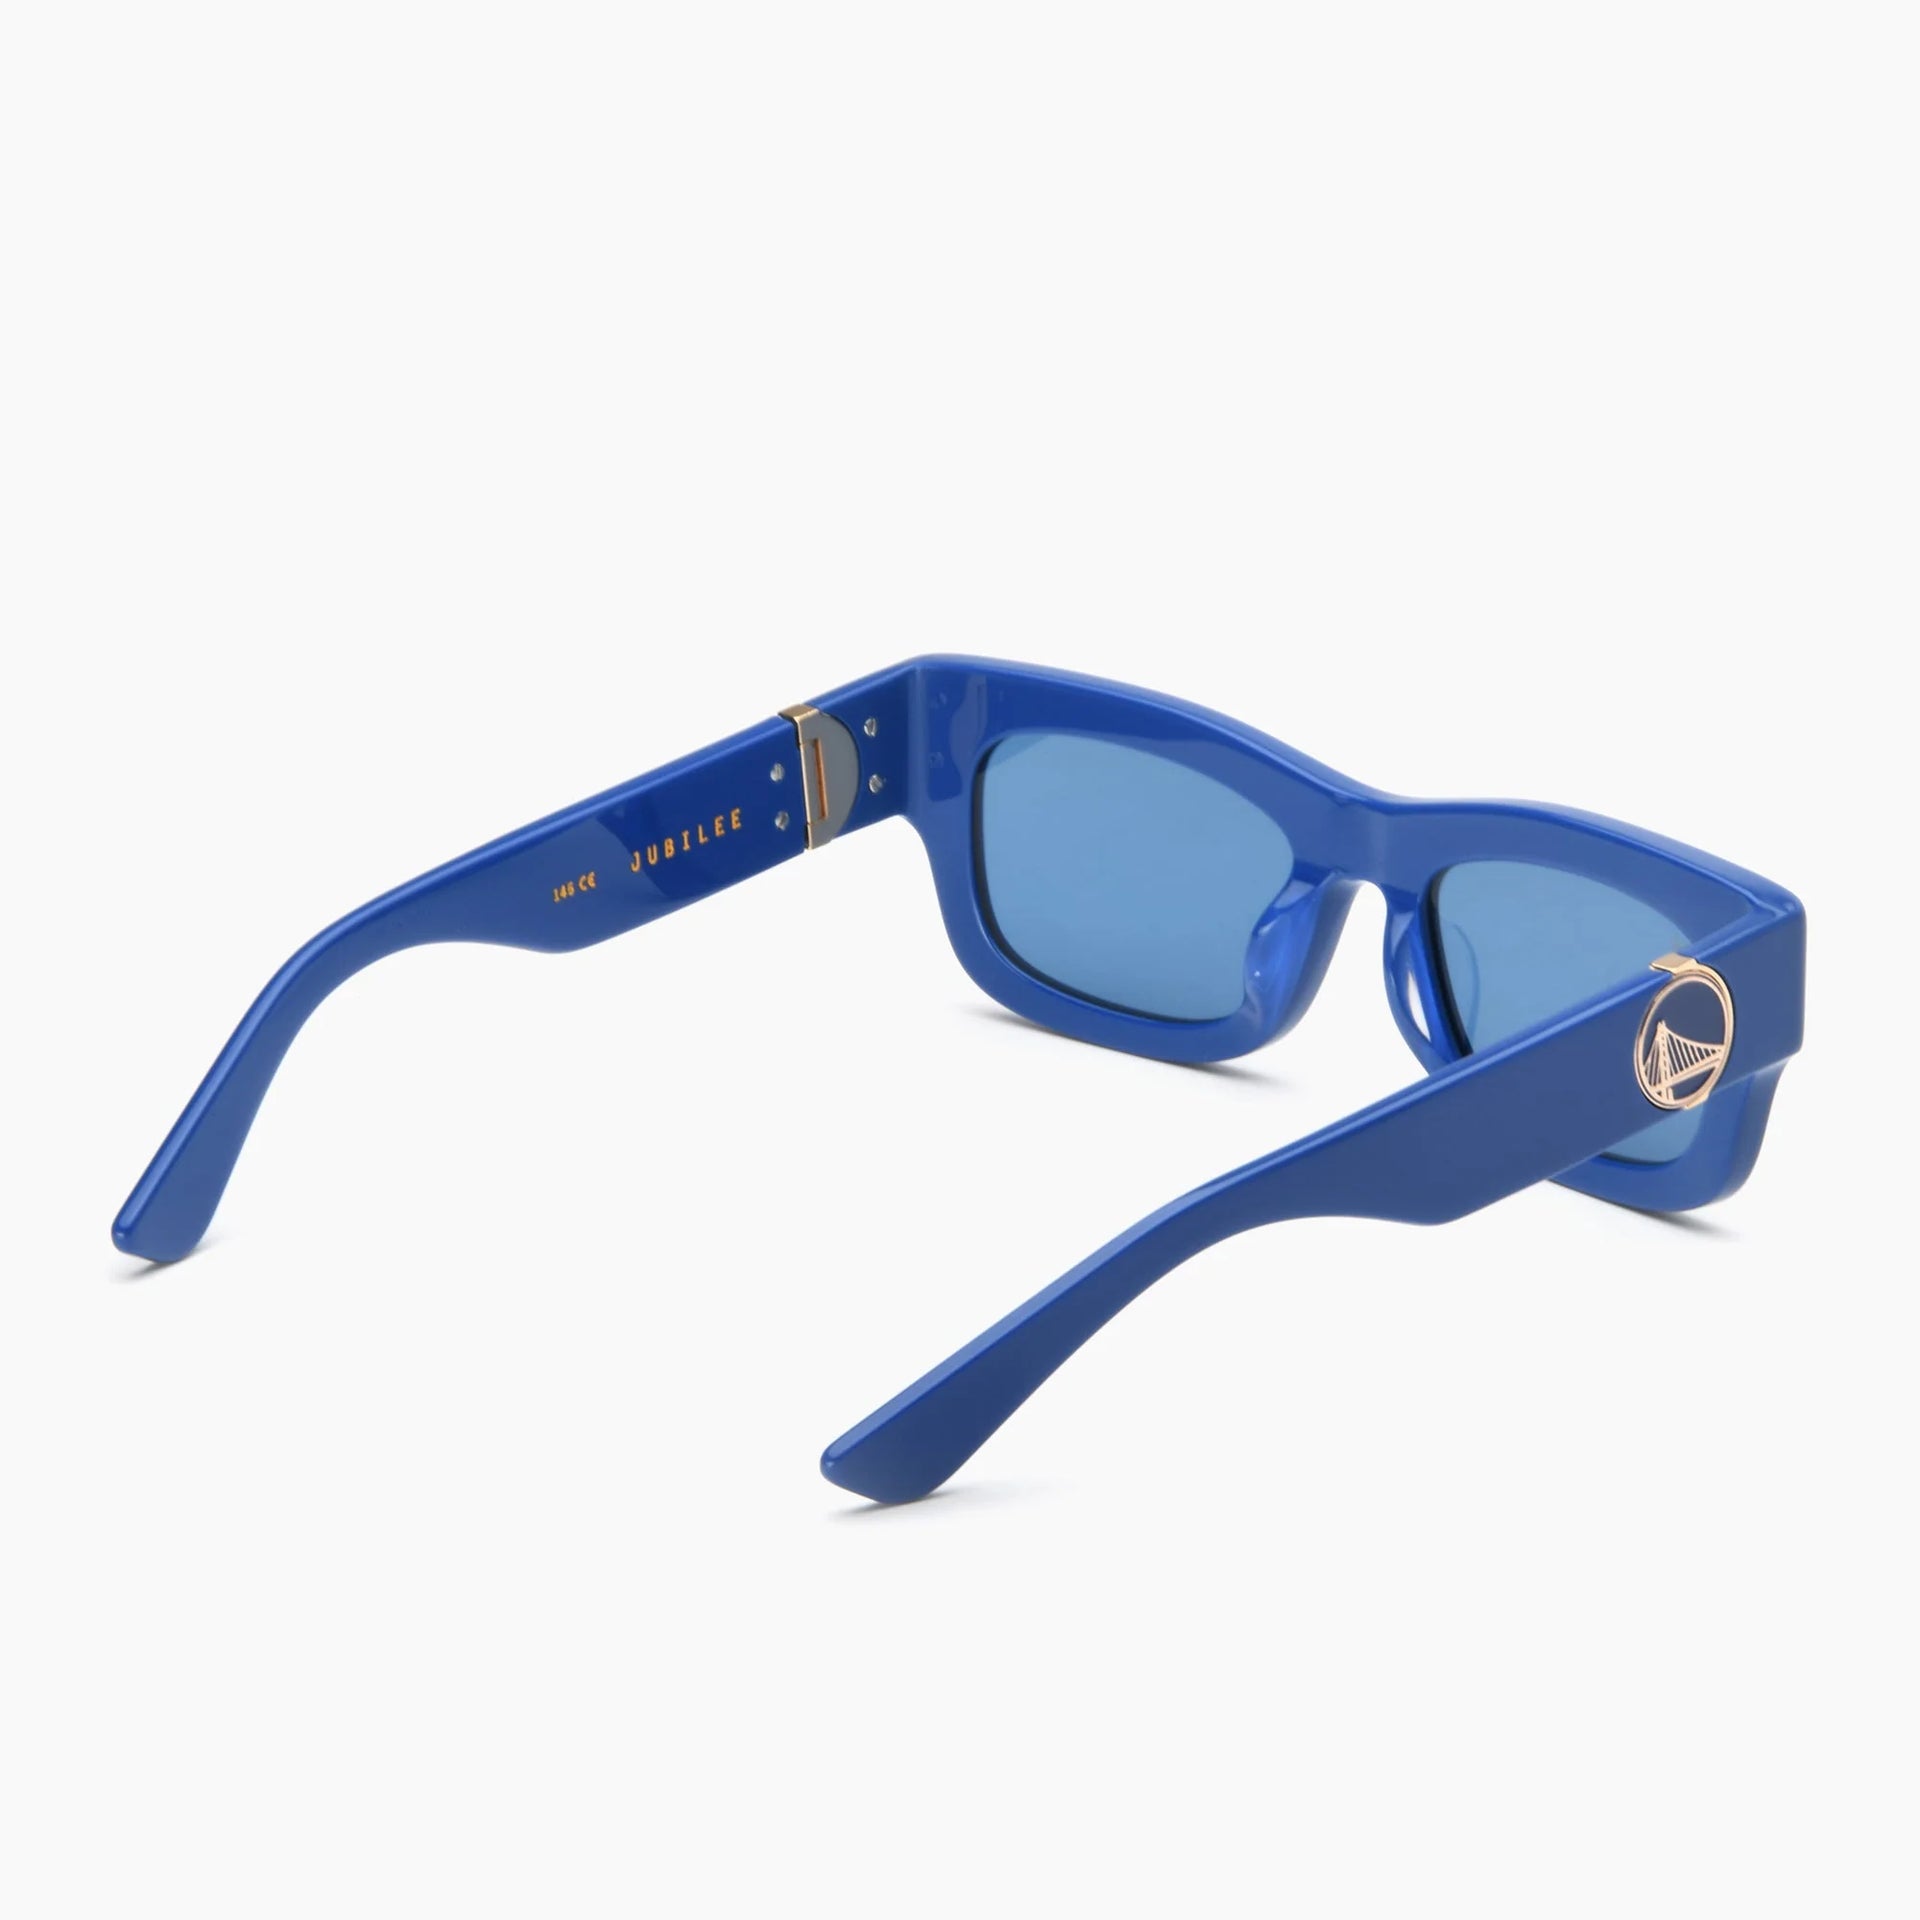 Jubilee x GS Warriors Sunglasses - Warriors Royal Blue